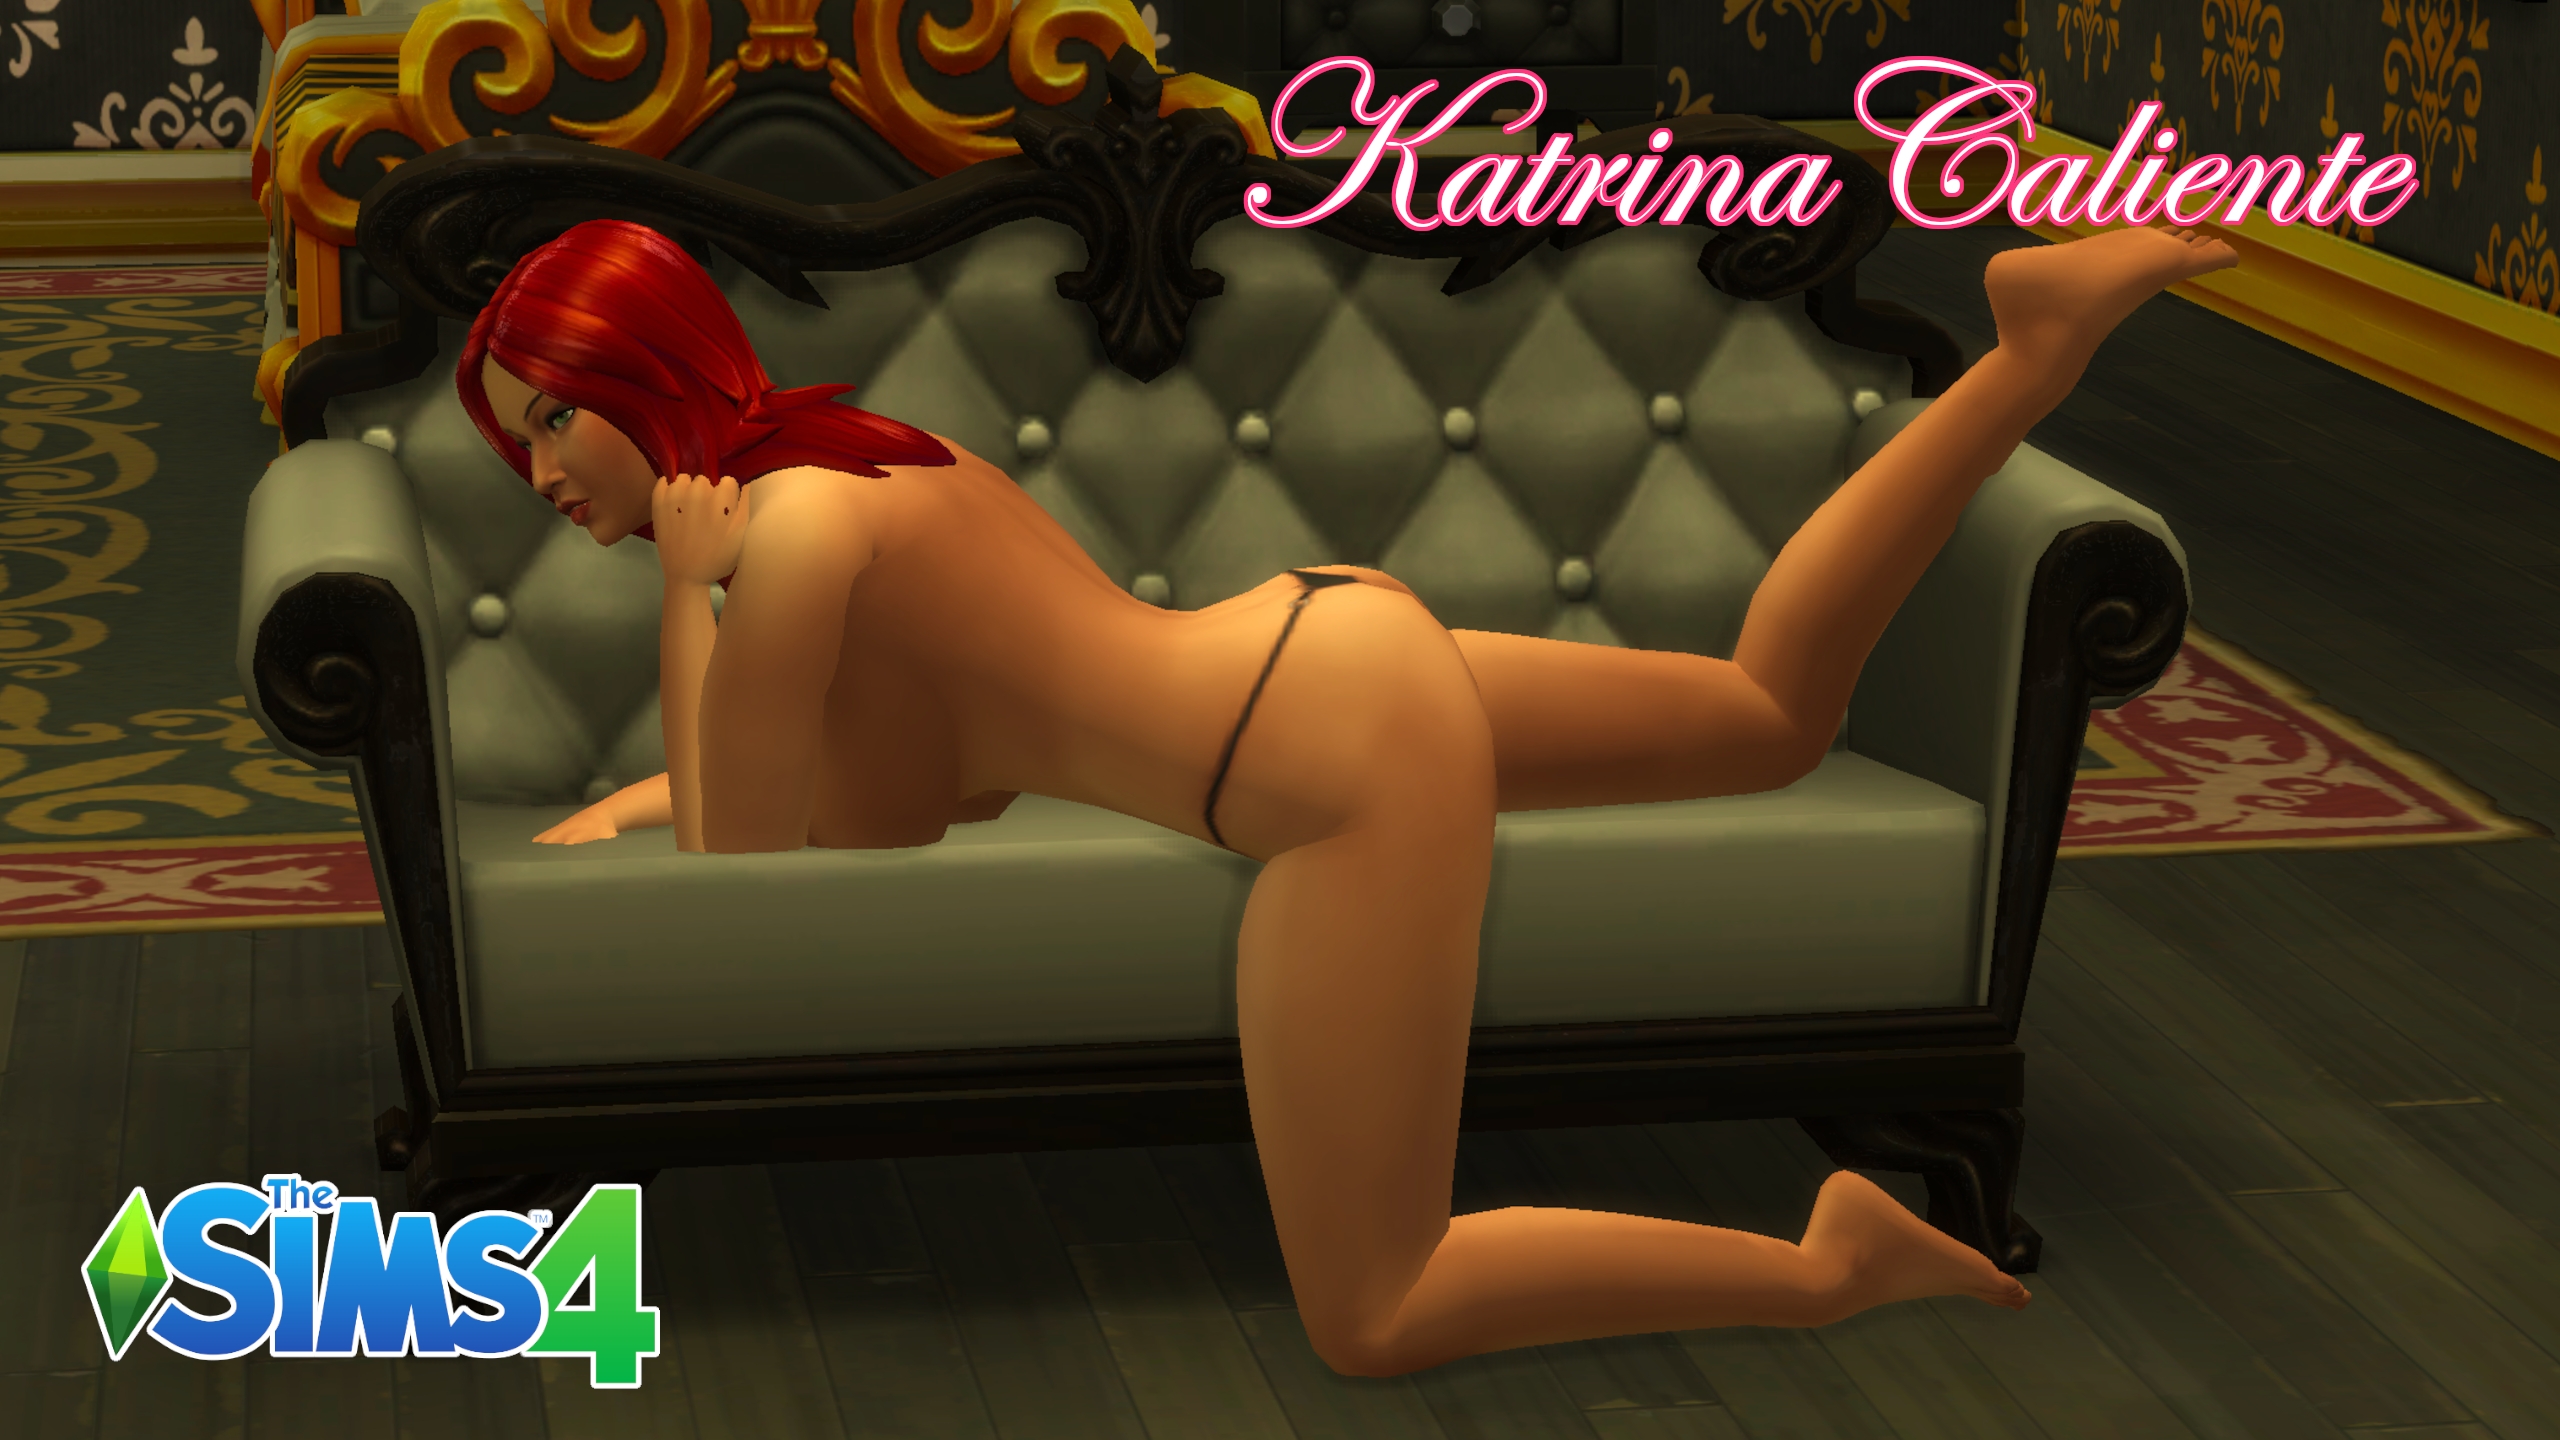 Katrina Caliente Desktop Wallpapers The Sims 4 Katrina Caliente Large Breasts Big Ass Thong Panties Red Hair Green Eyes Topless 3